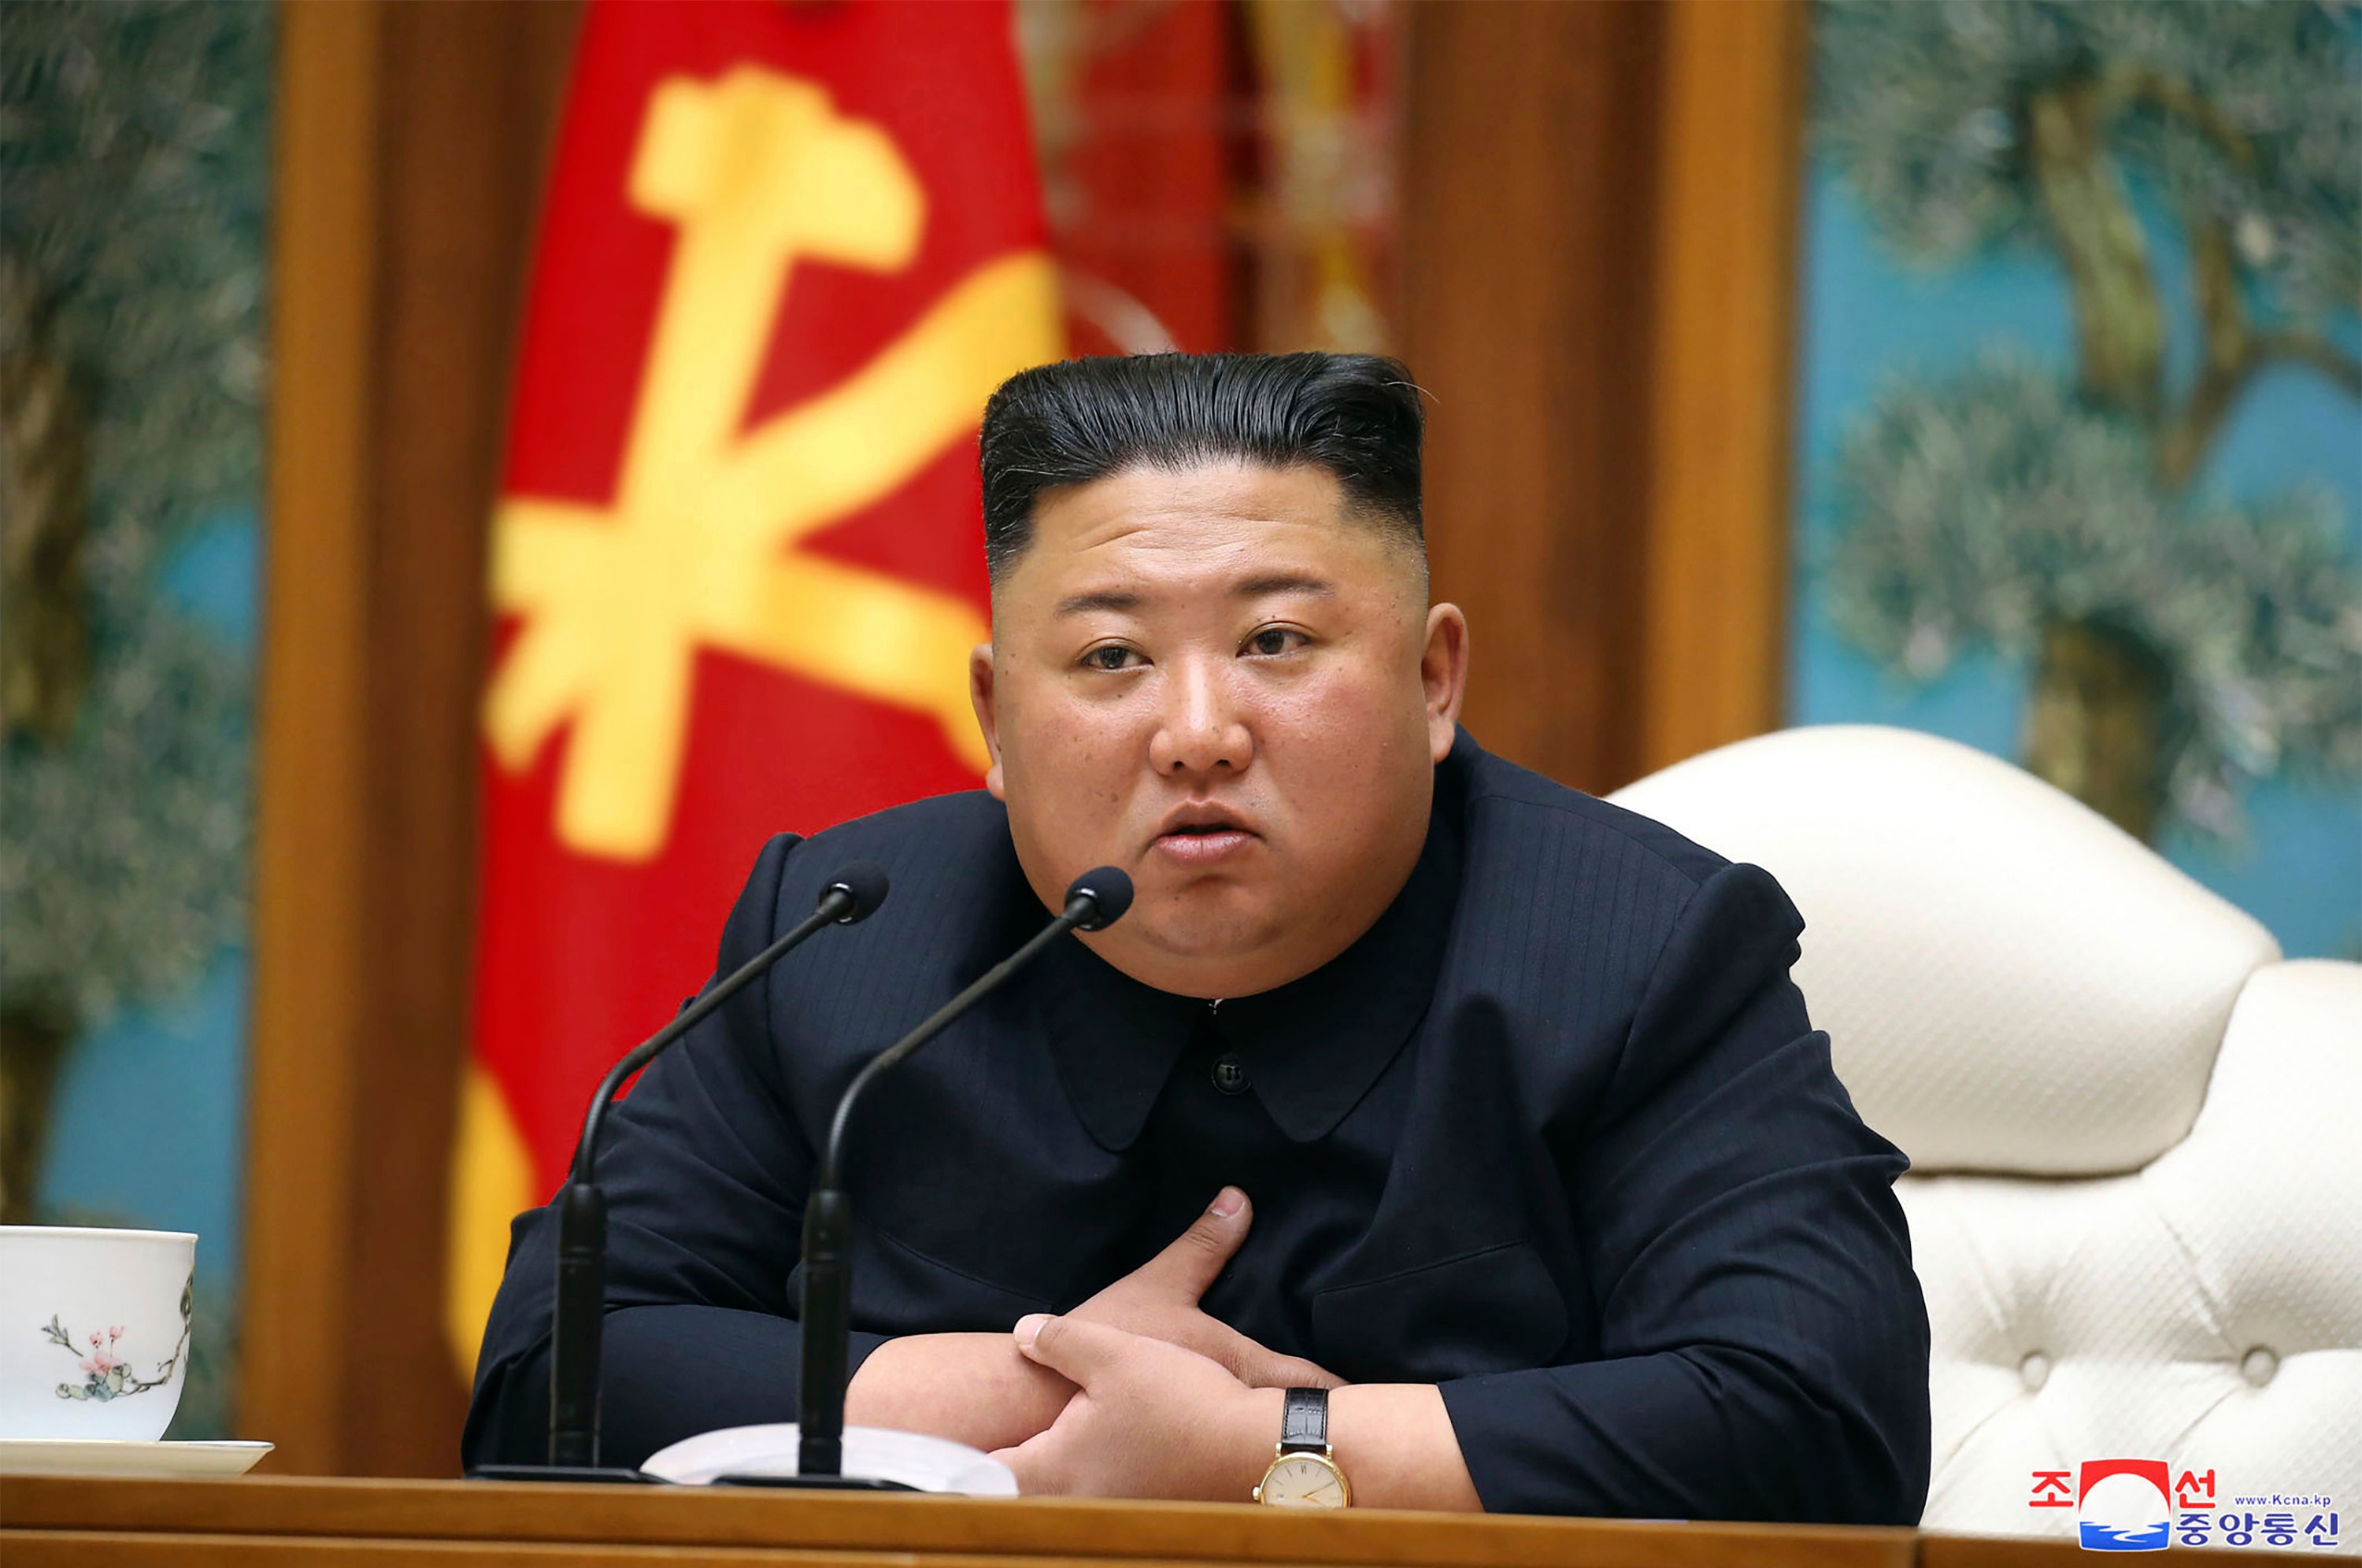 UN nuclear watchdog: Recent North Korea activity a ‘serious concern’